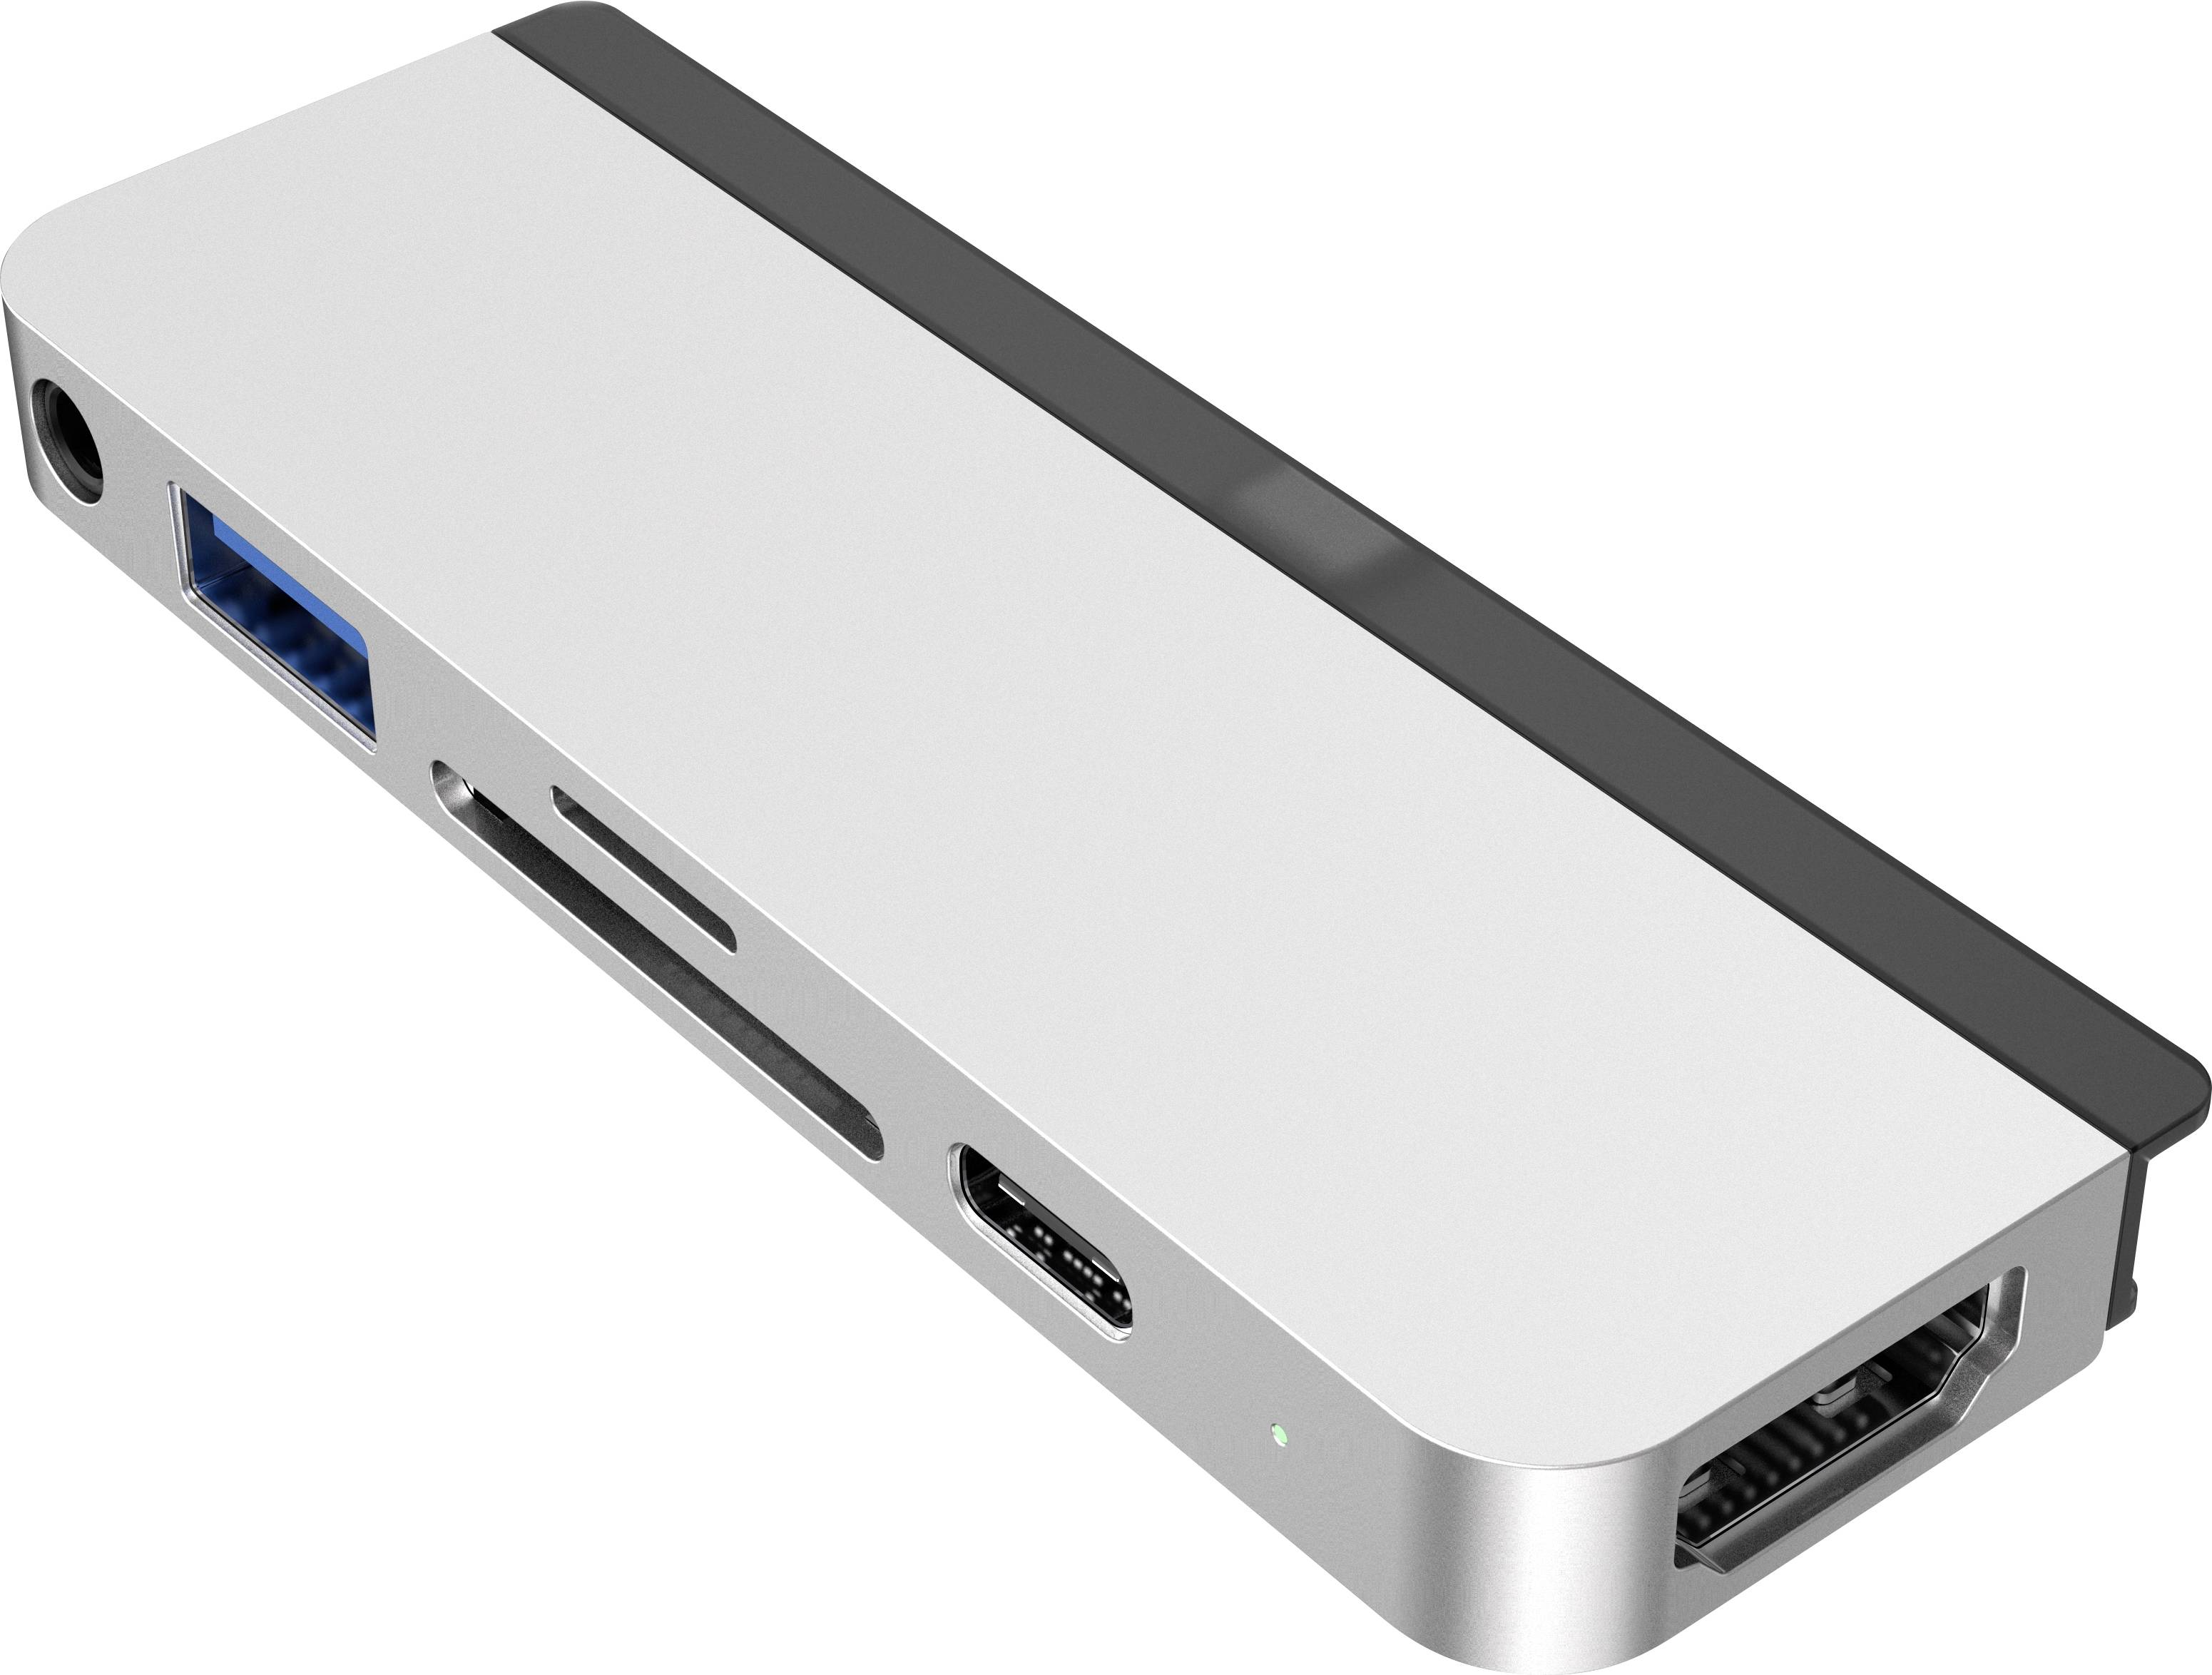 HYPER 6-in-1 iPad Pro USB-C Hub, Silber